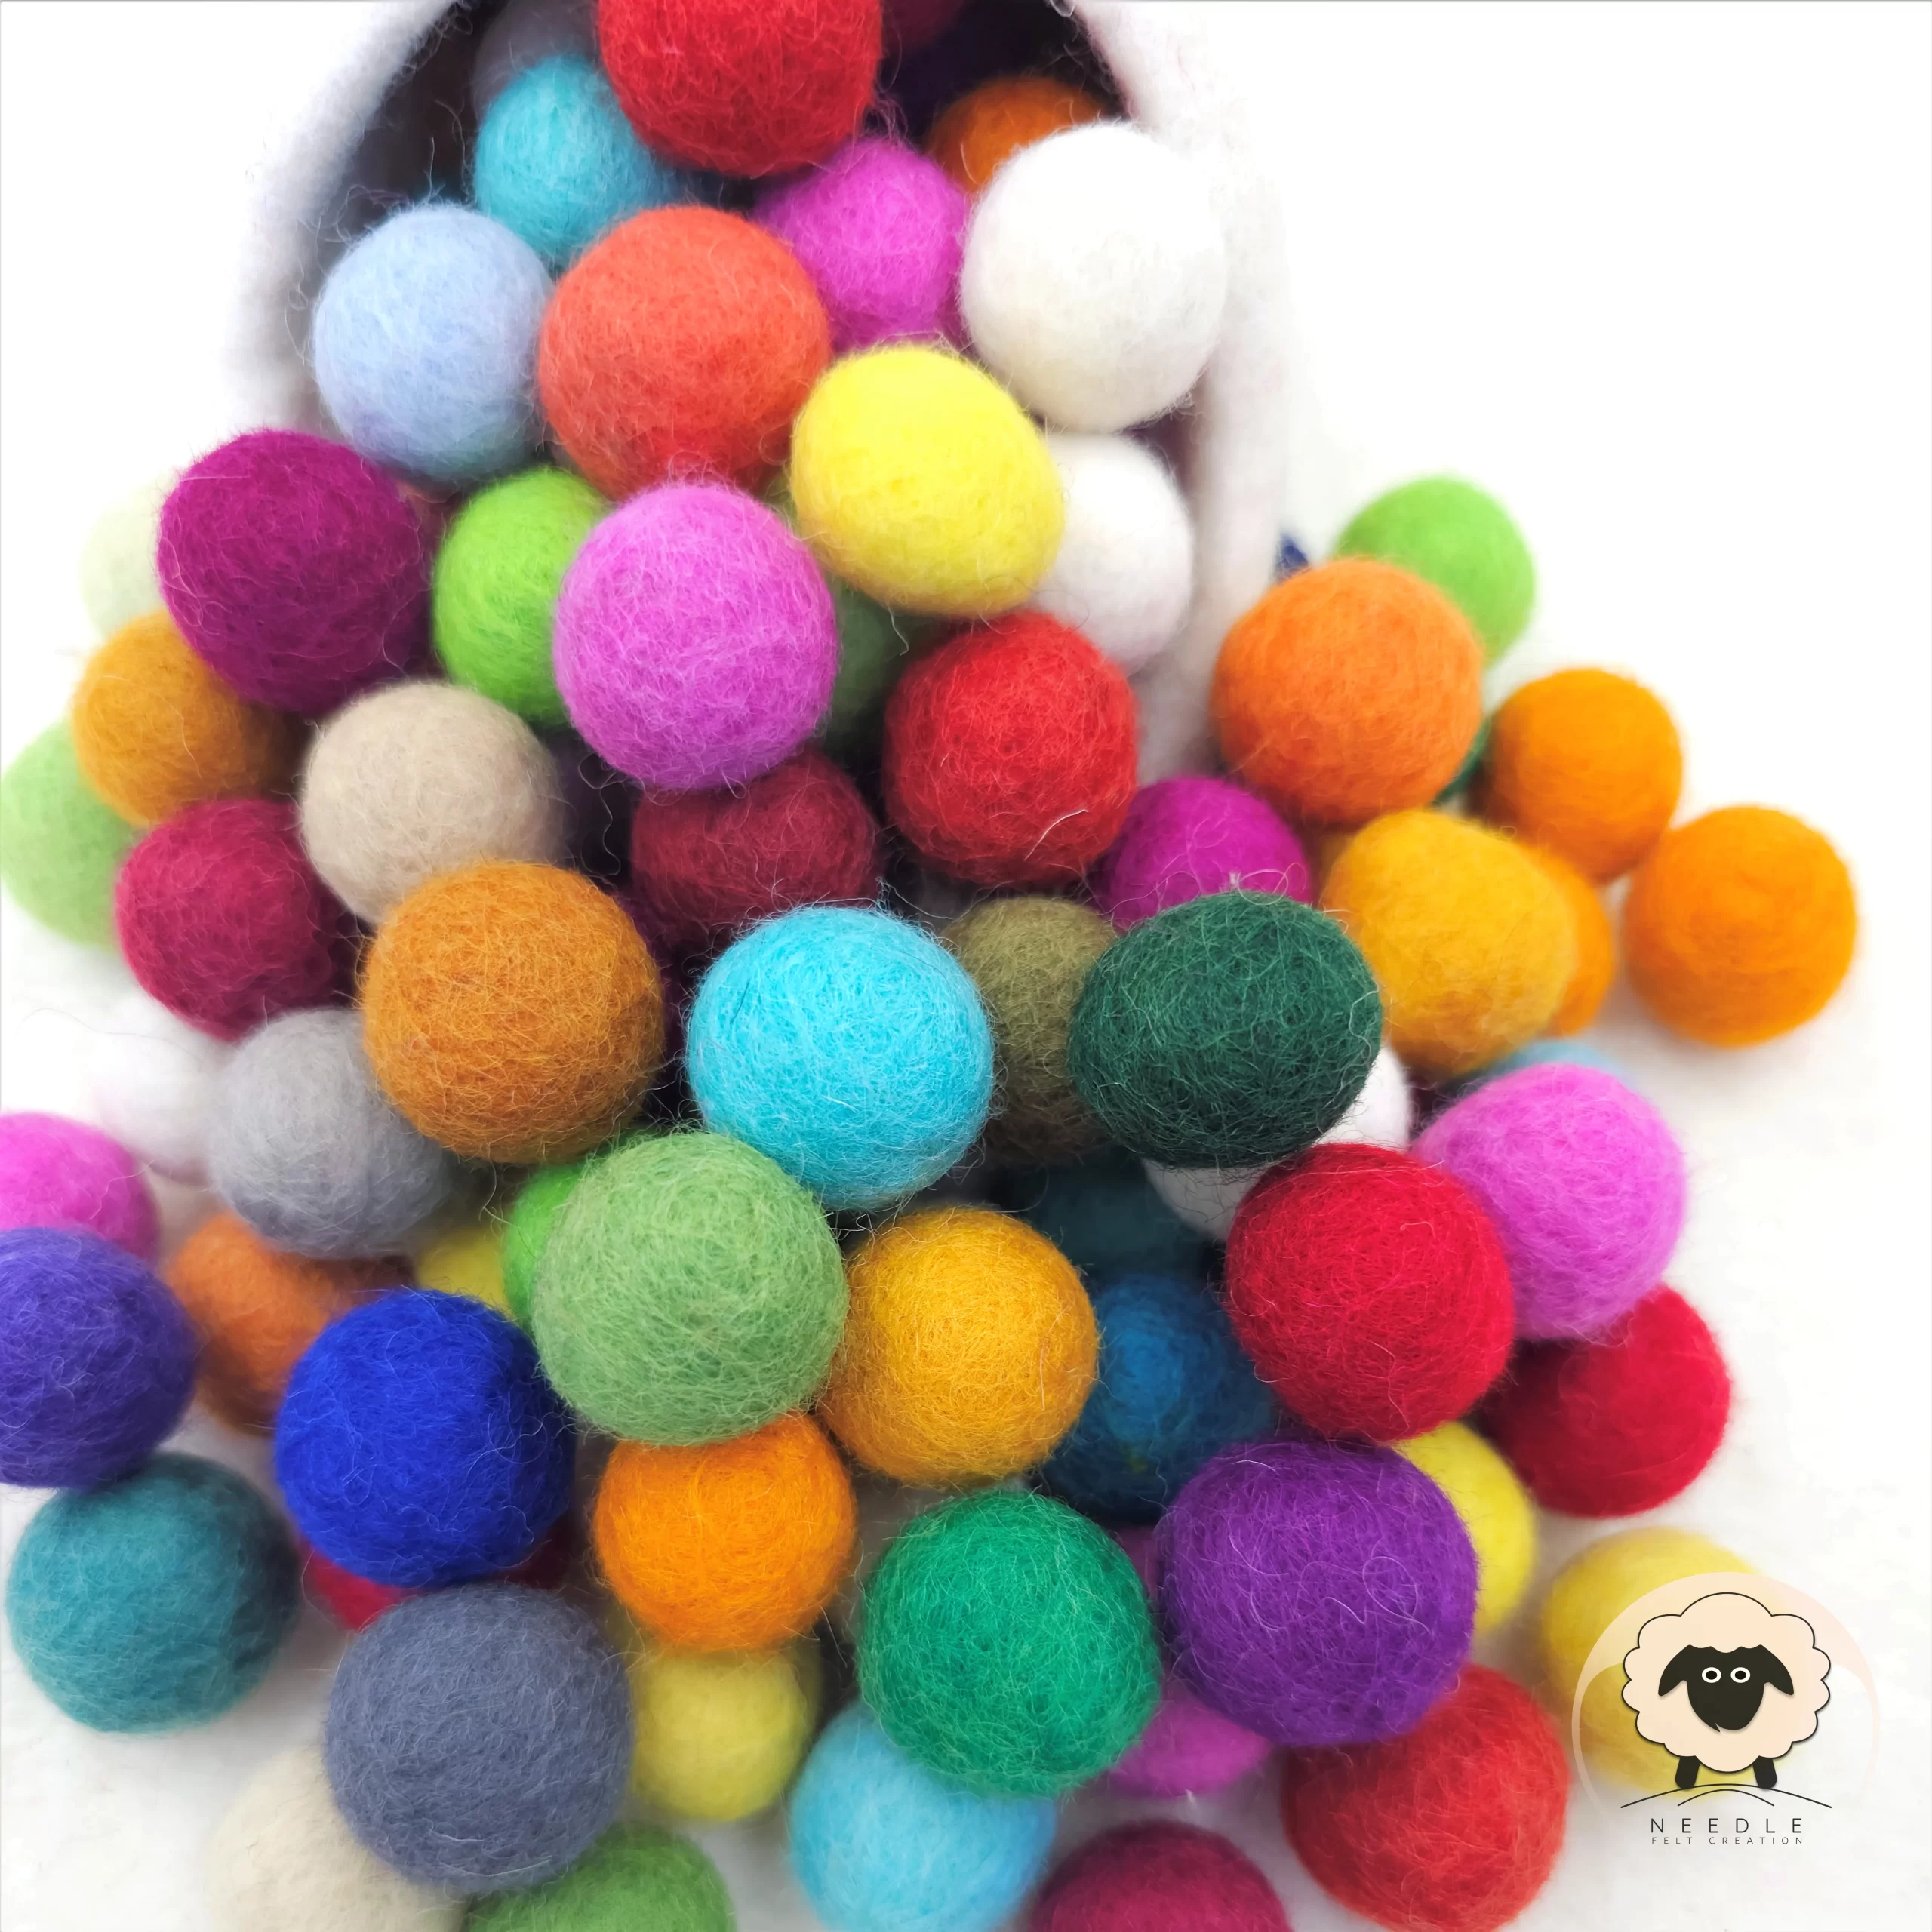 2cm Wholesale Felt Balls [100 Colors] - Felt & Yarn